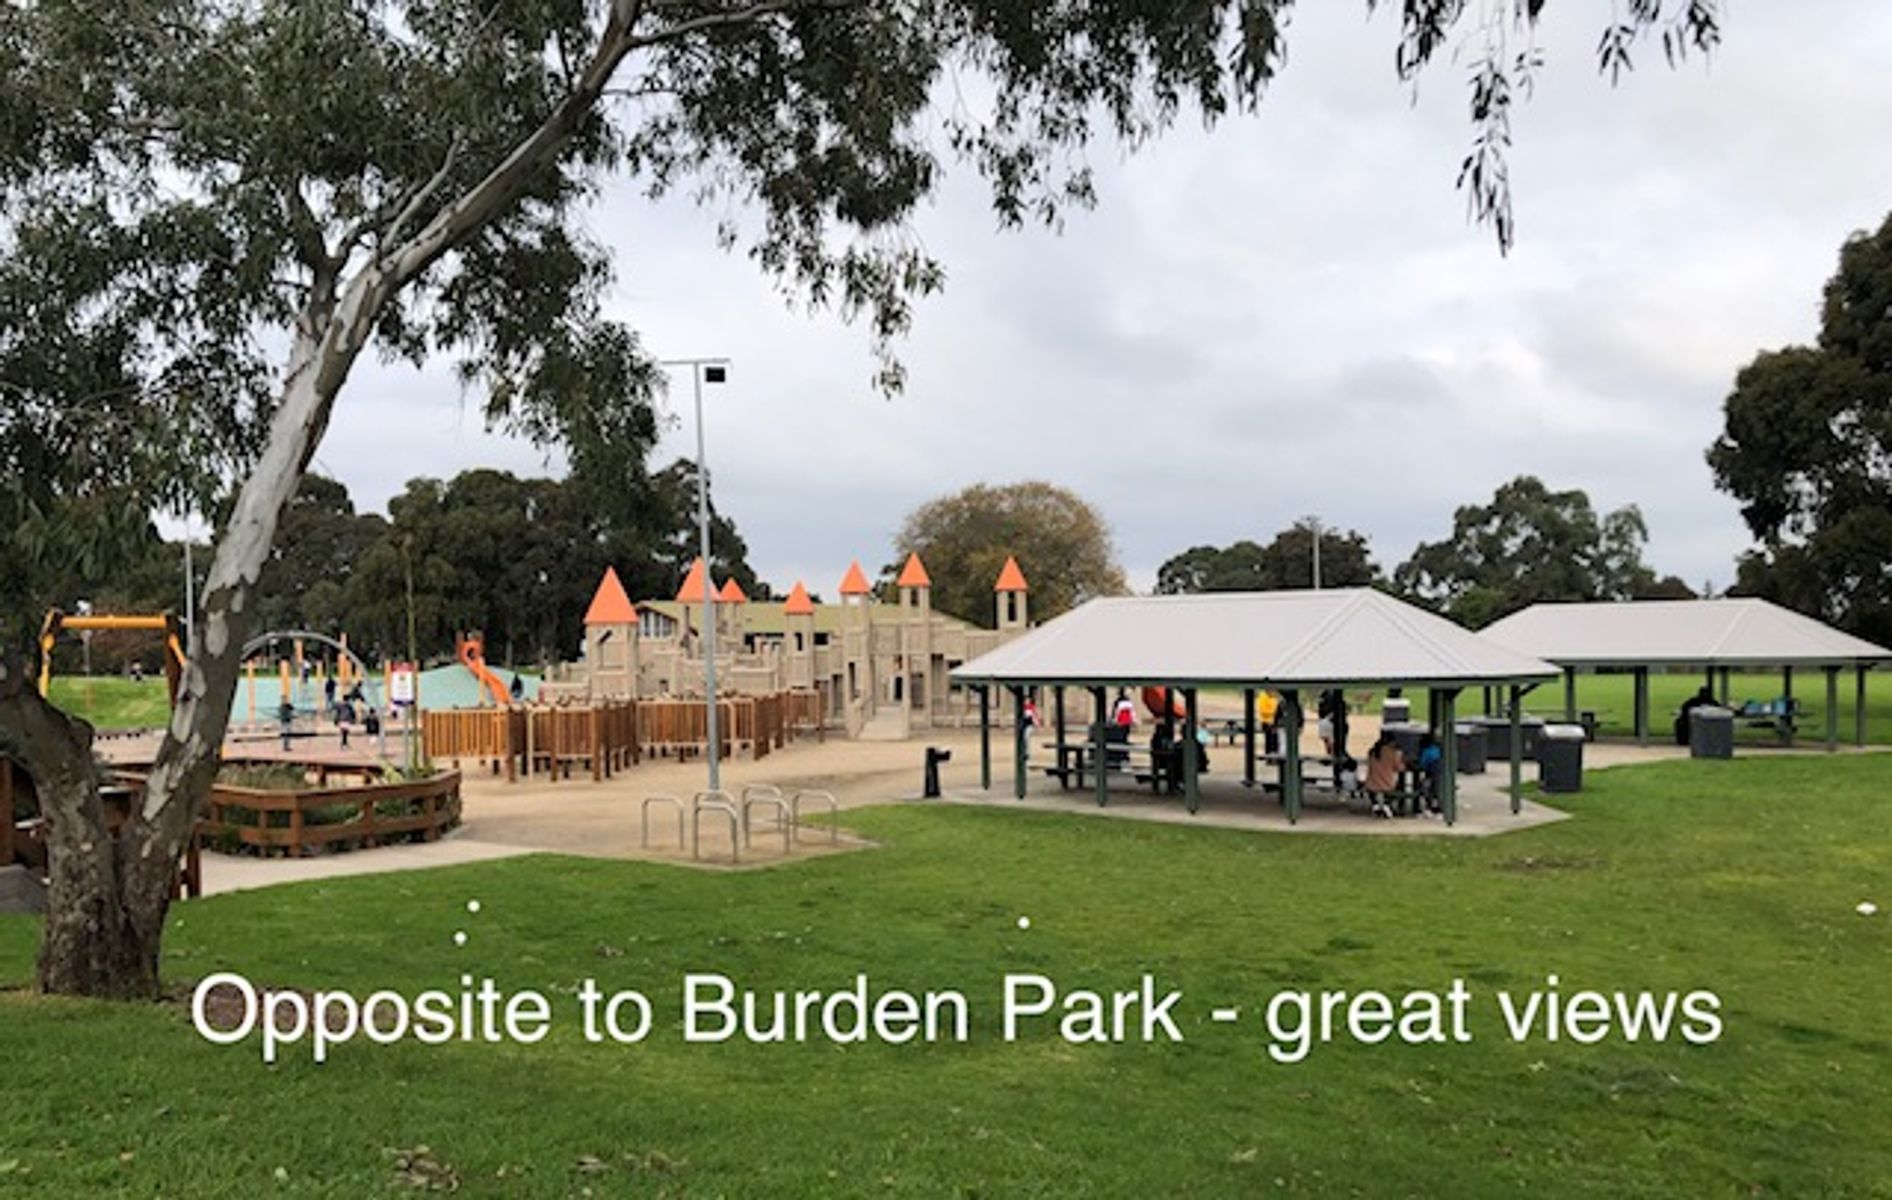 Burden Park